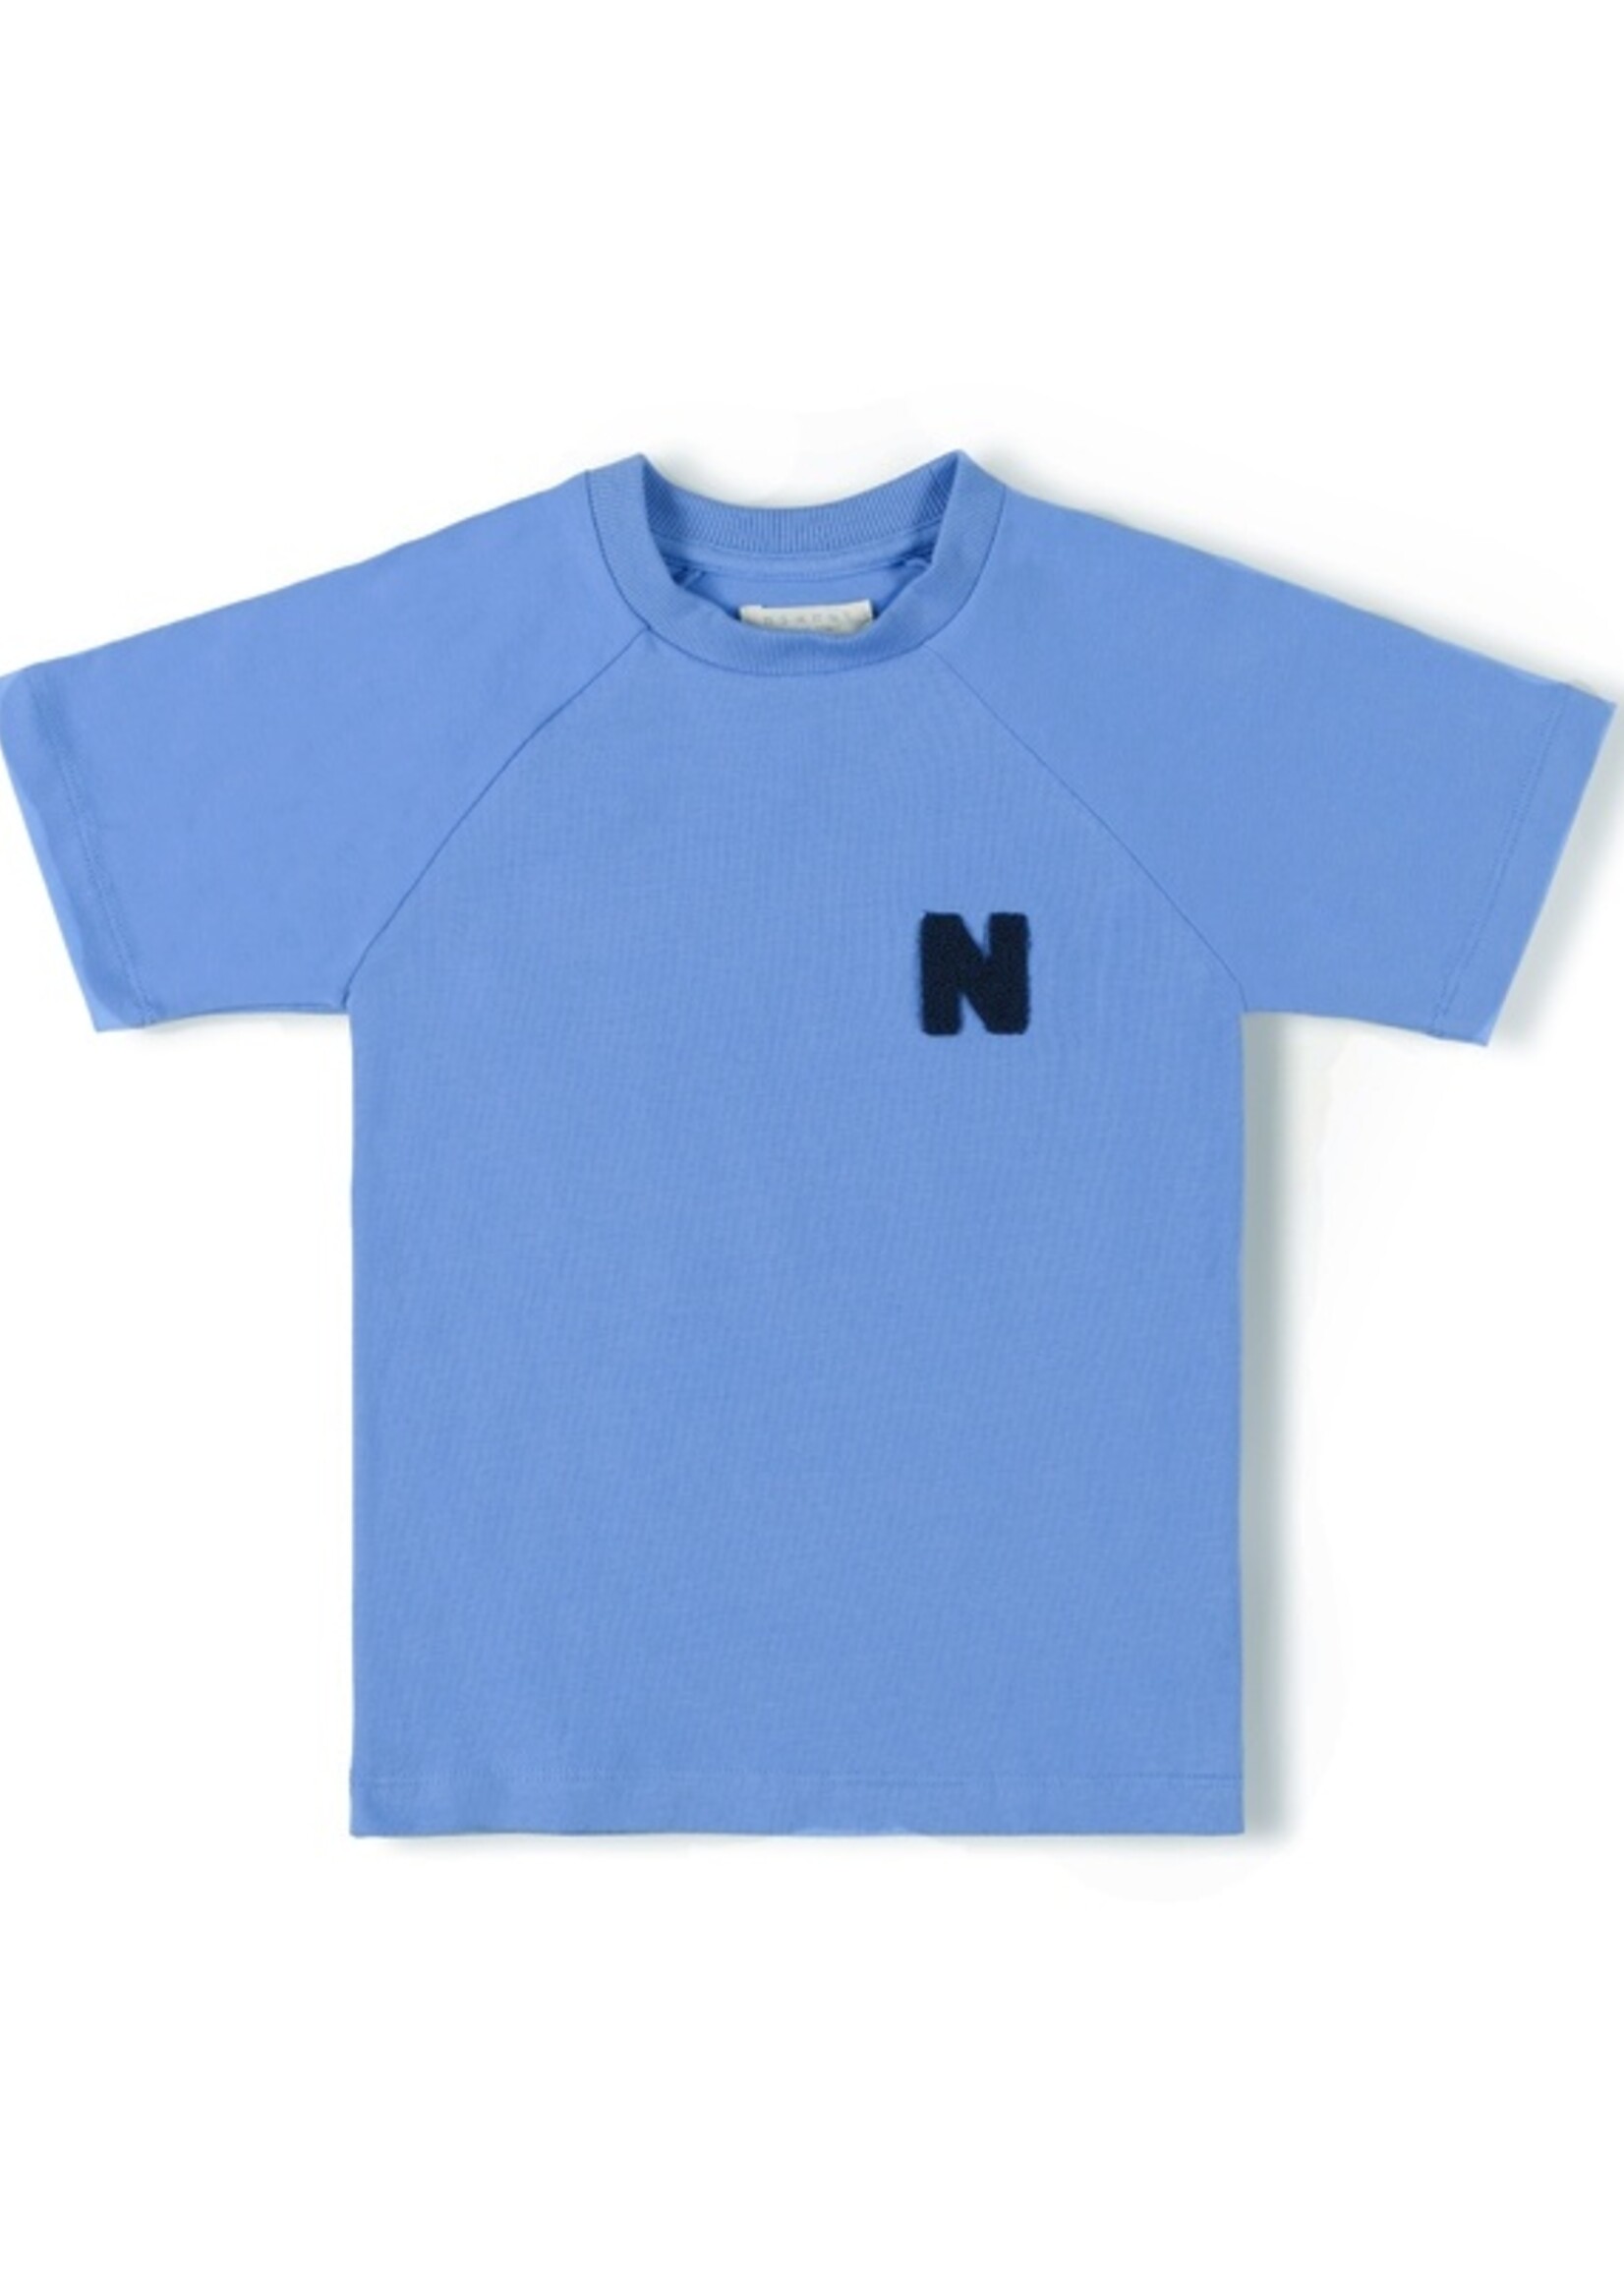 Nixnut Nixnut | N Tshirt – Sky